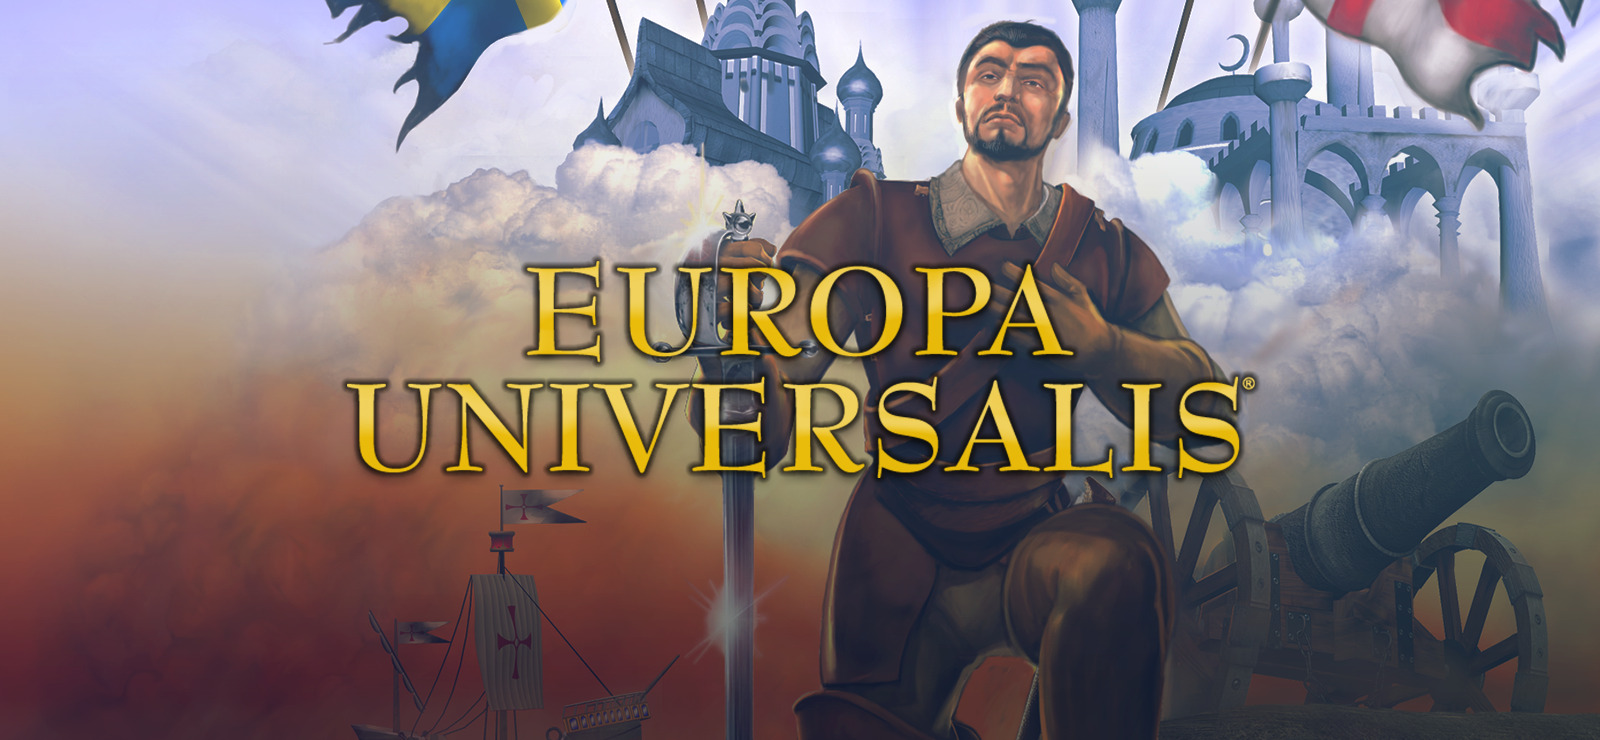 will we get europa universalis 5